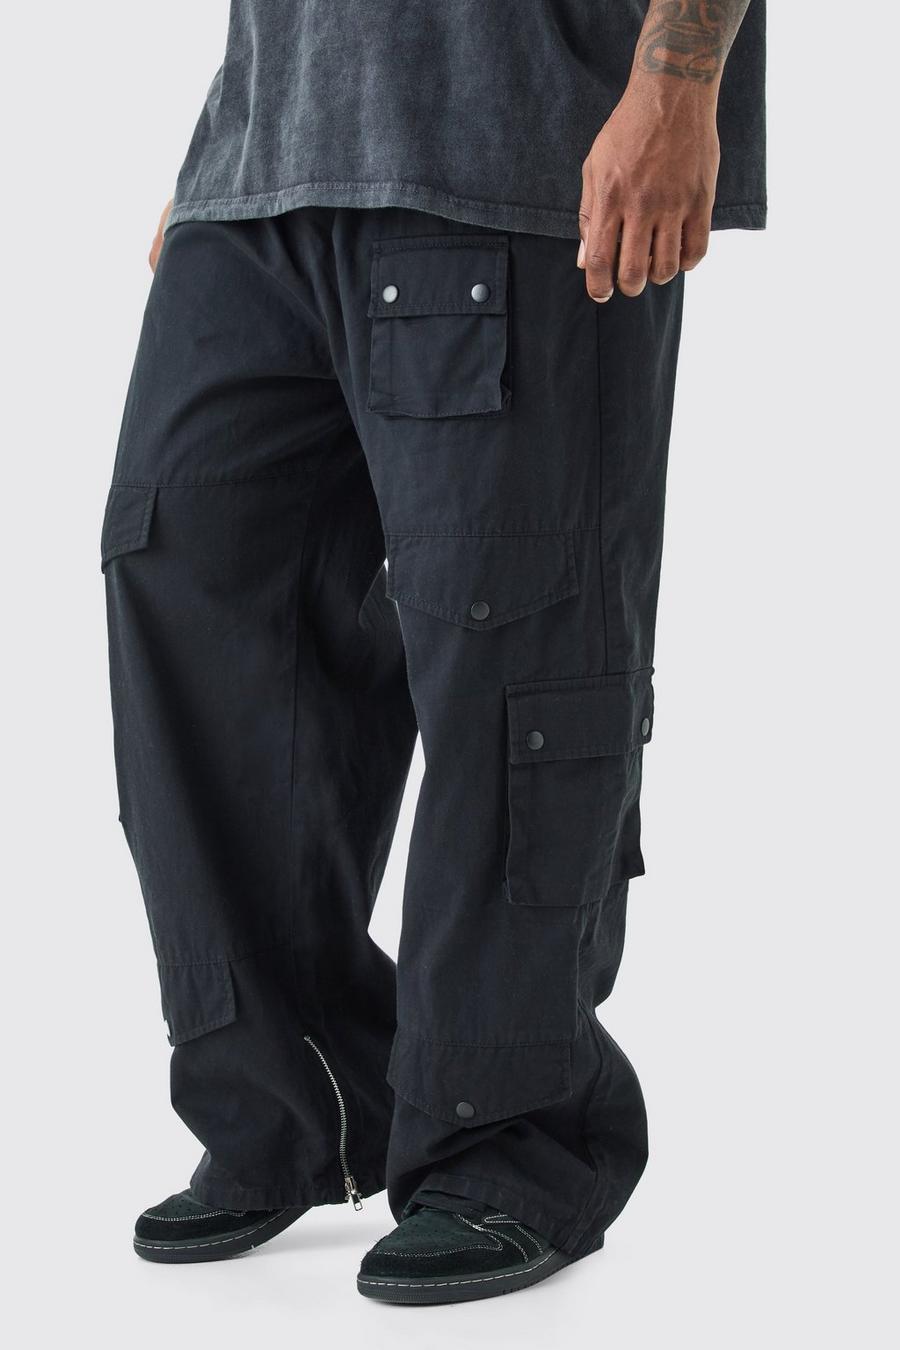 Pantalón Plus cargo holgado con cintura elástica, Black